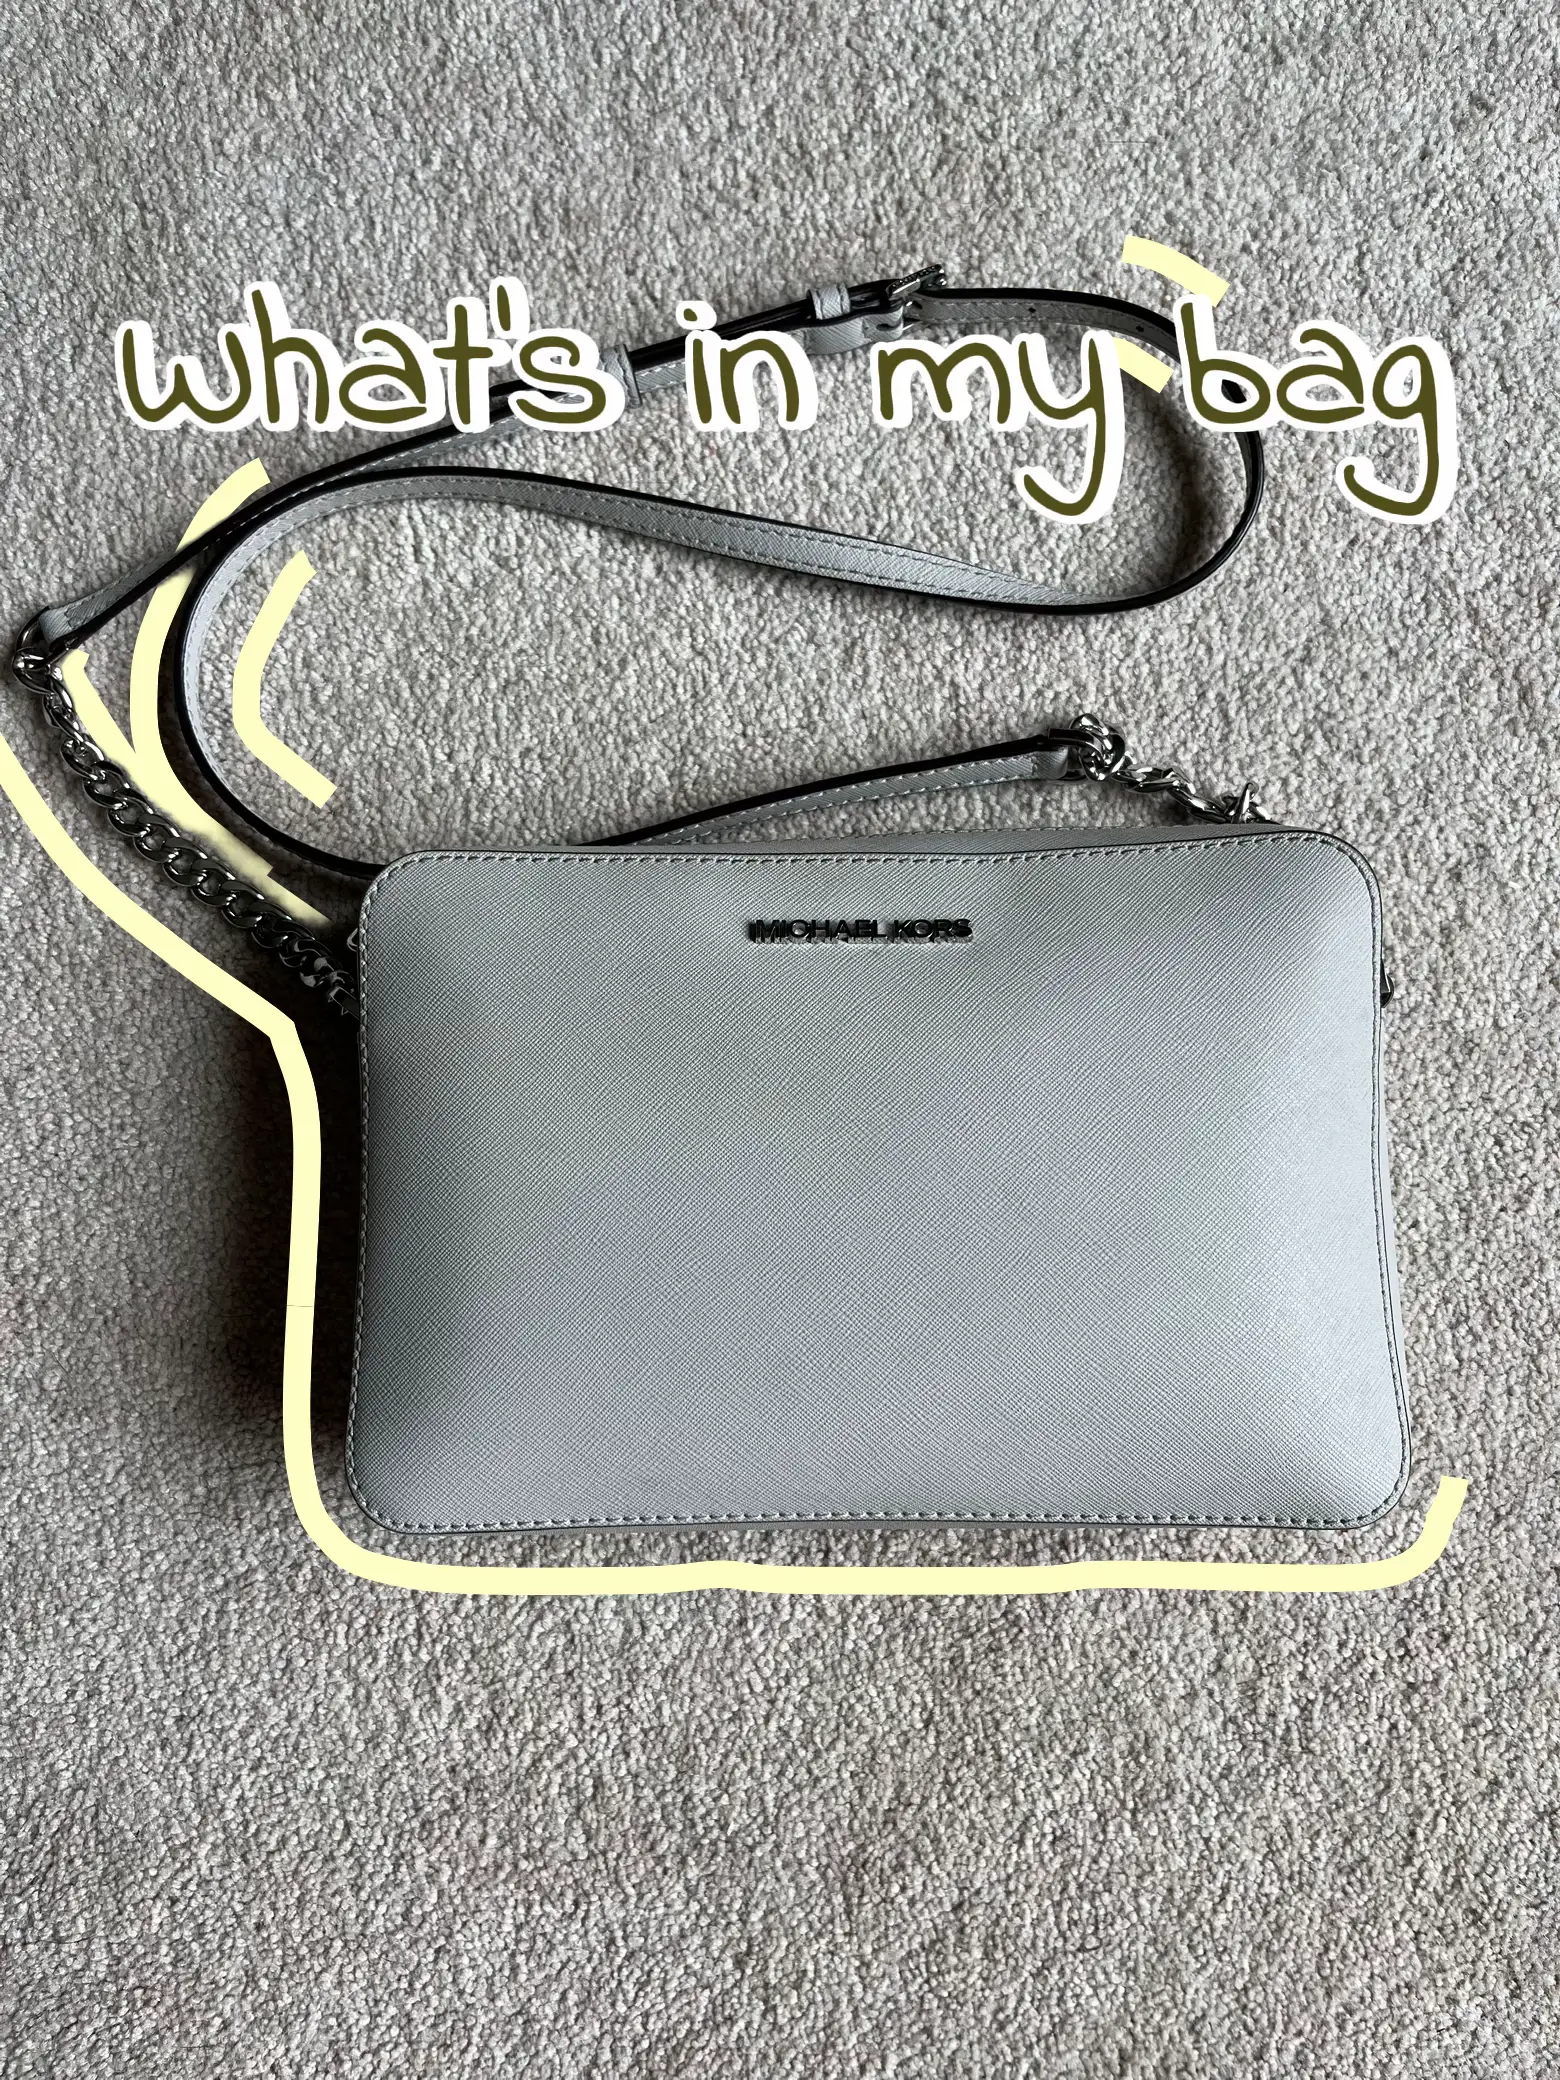 Whats In My Bag! - Michael Kors 